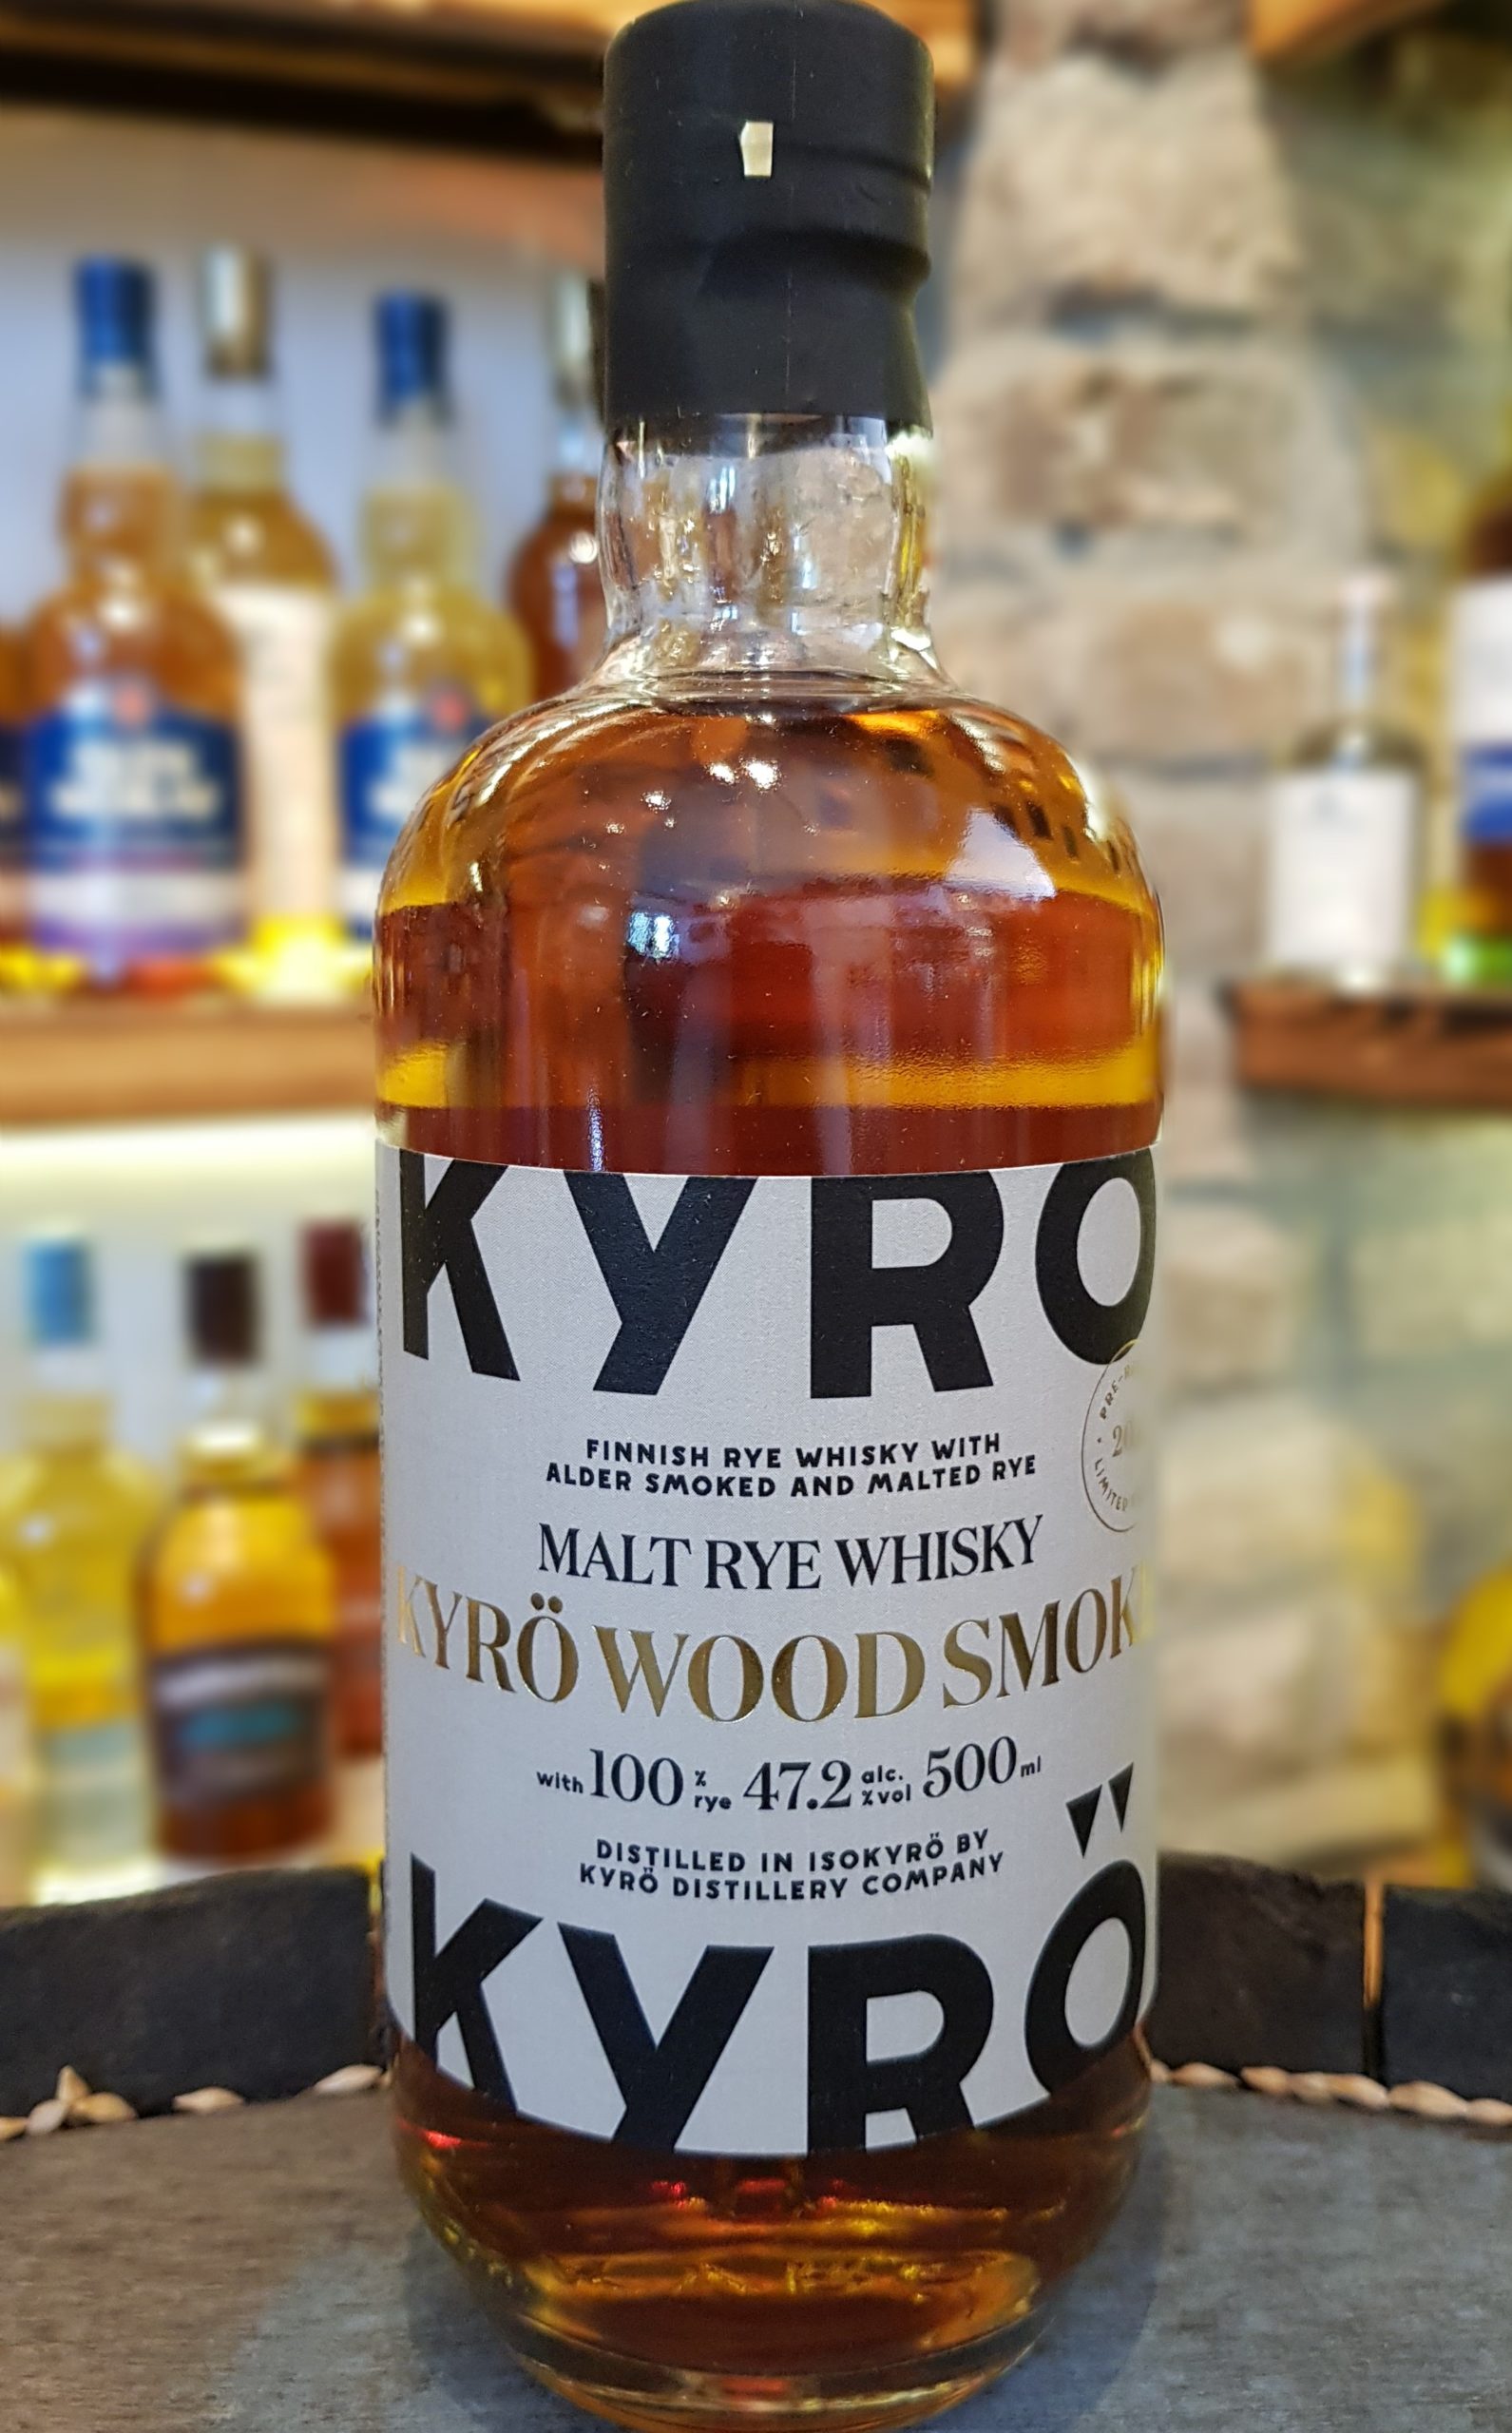 Kyrö Woodsmoke Malt Rye Whisky 47,2% – Postert Whisky – Spirituosenhandel  Köln rechtsrheinisch – Whisky, Rum und | Whisky